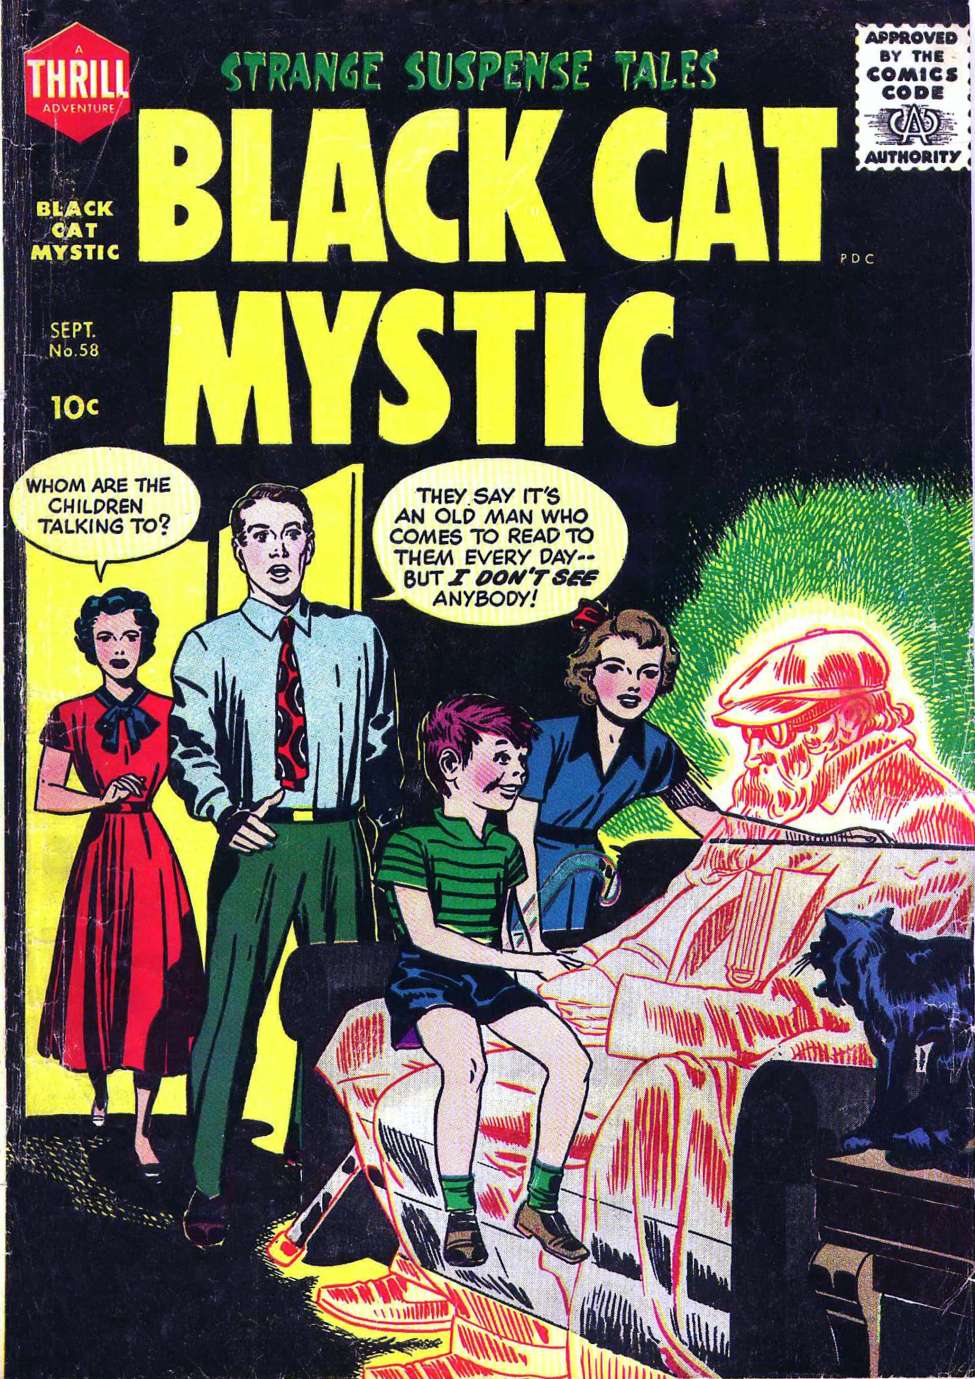 Comic Book Cover For Black Cat 58 (Mystic)